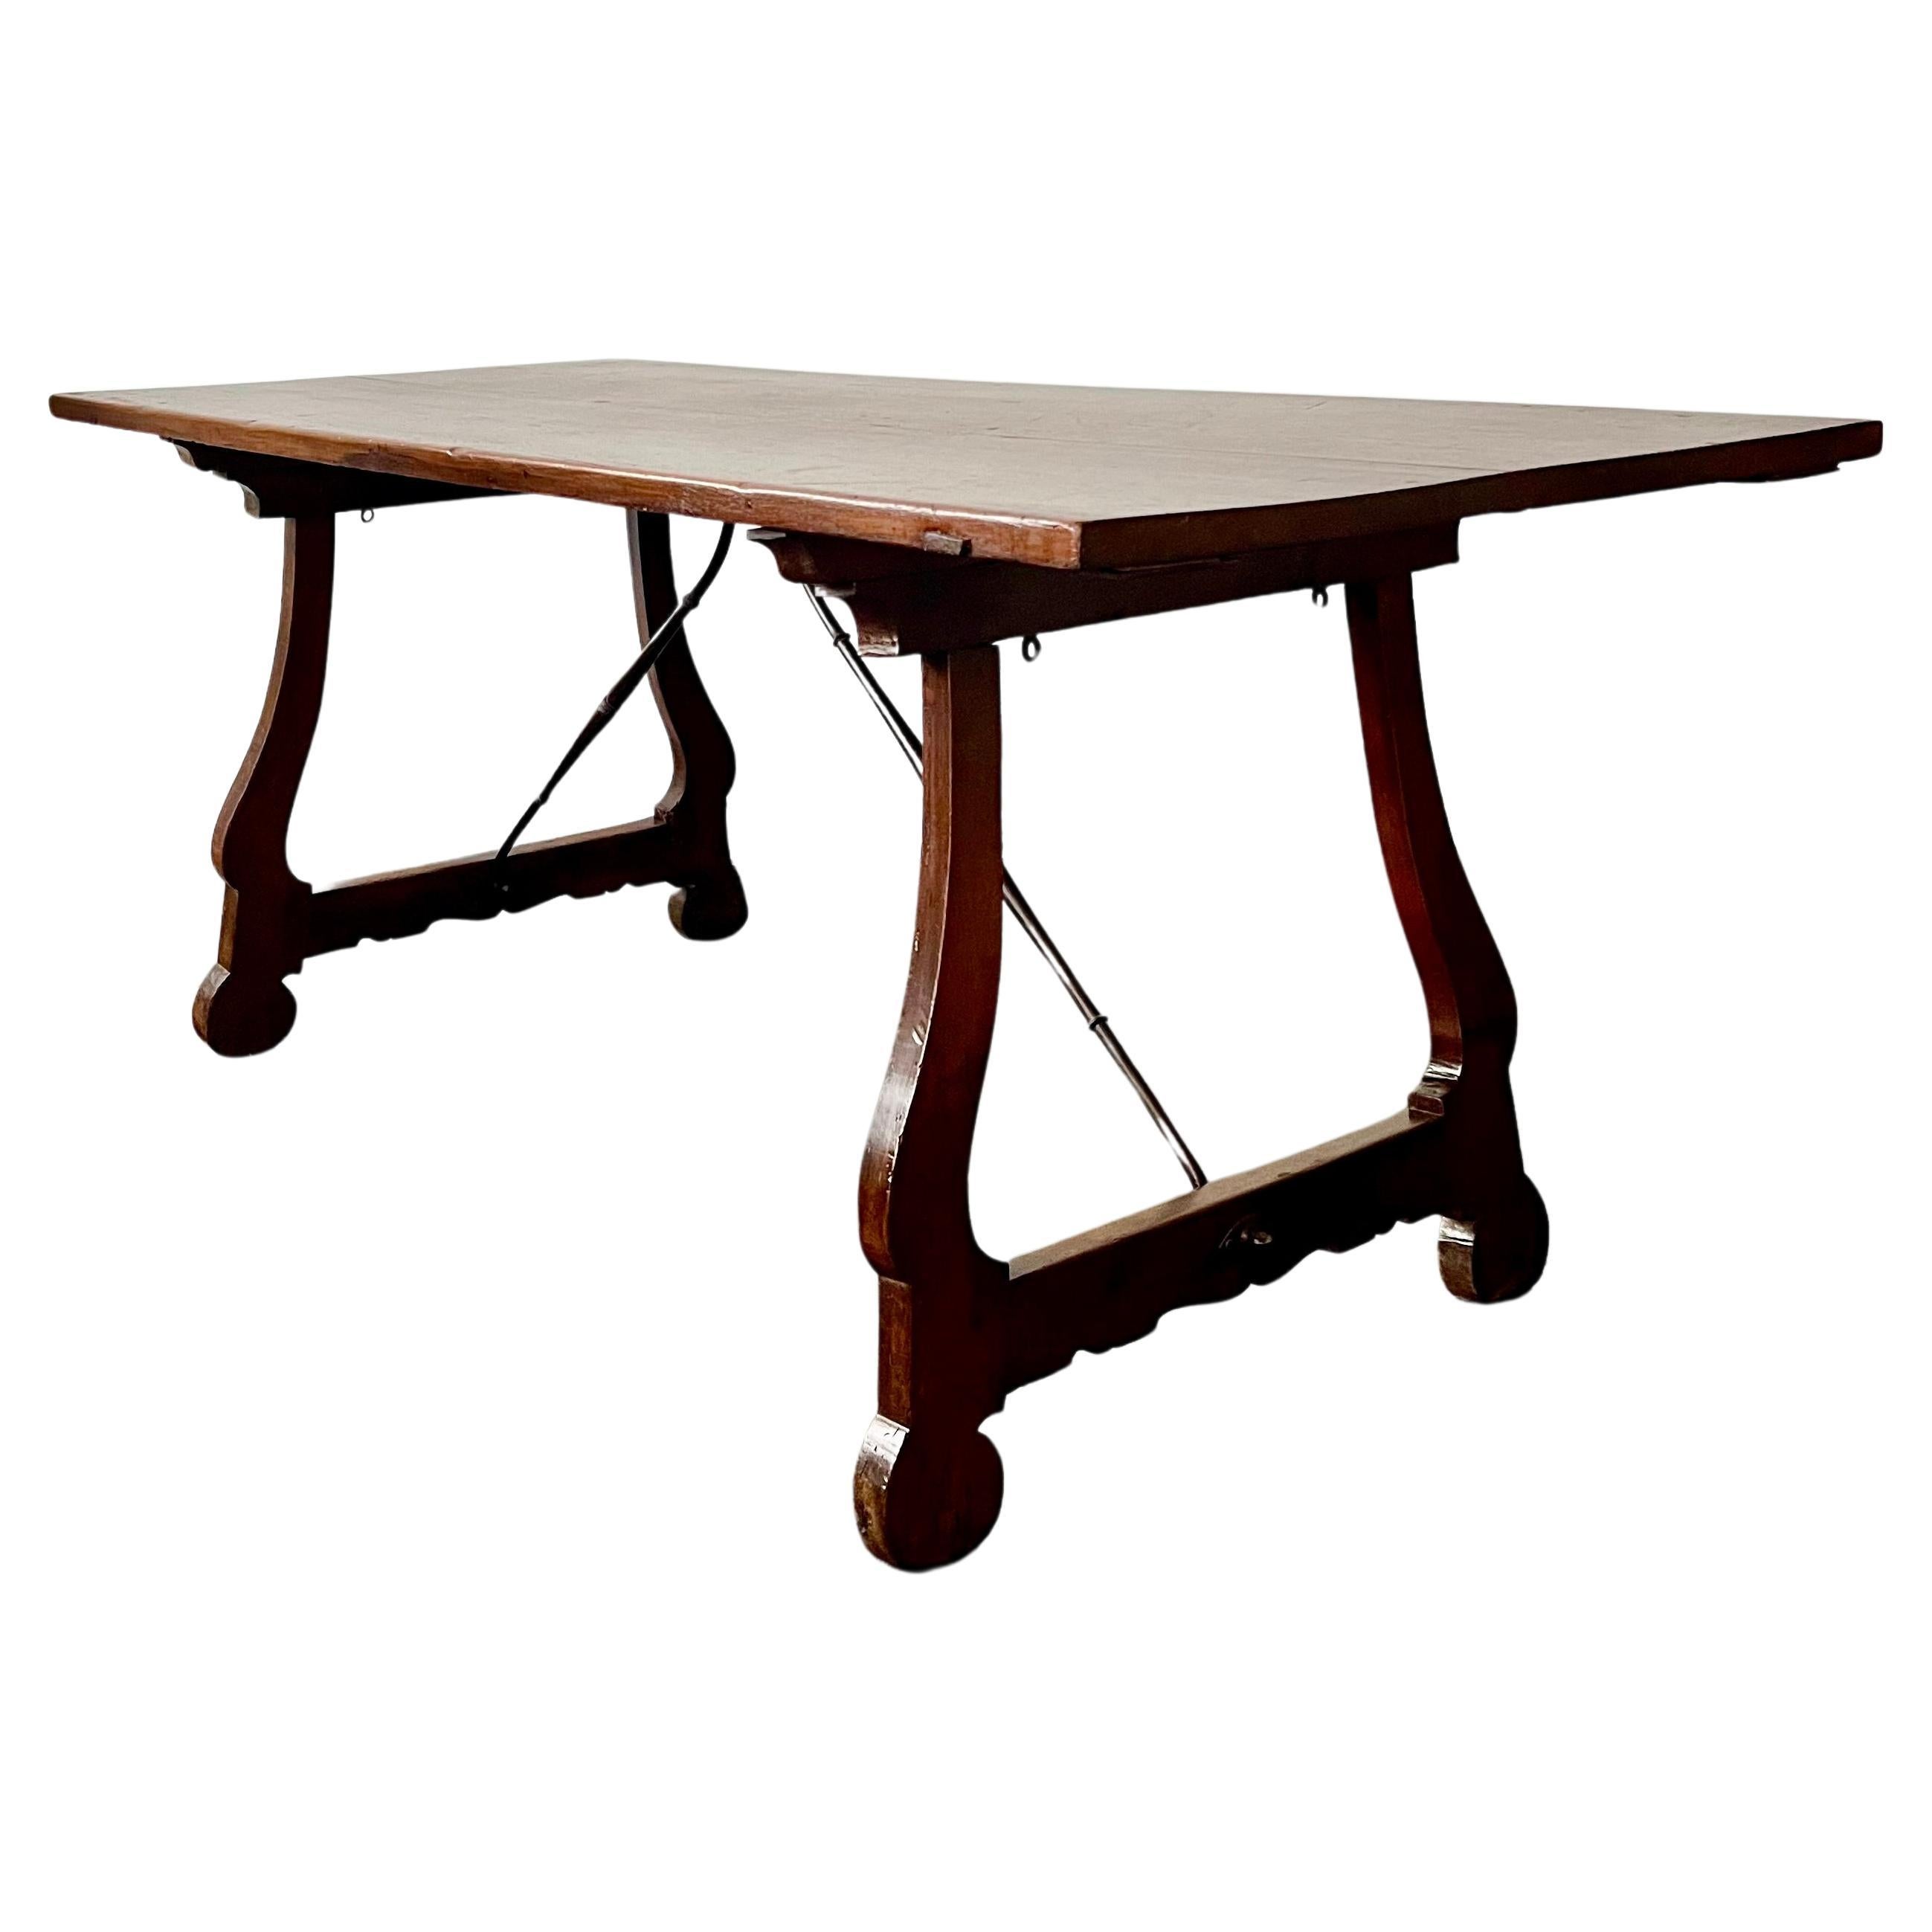 18th century Italian Walnut Trestle Table / Console For Sale